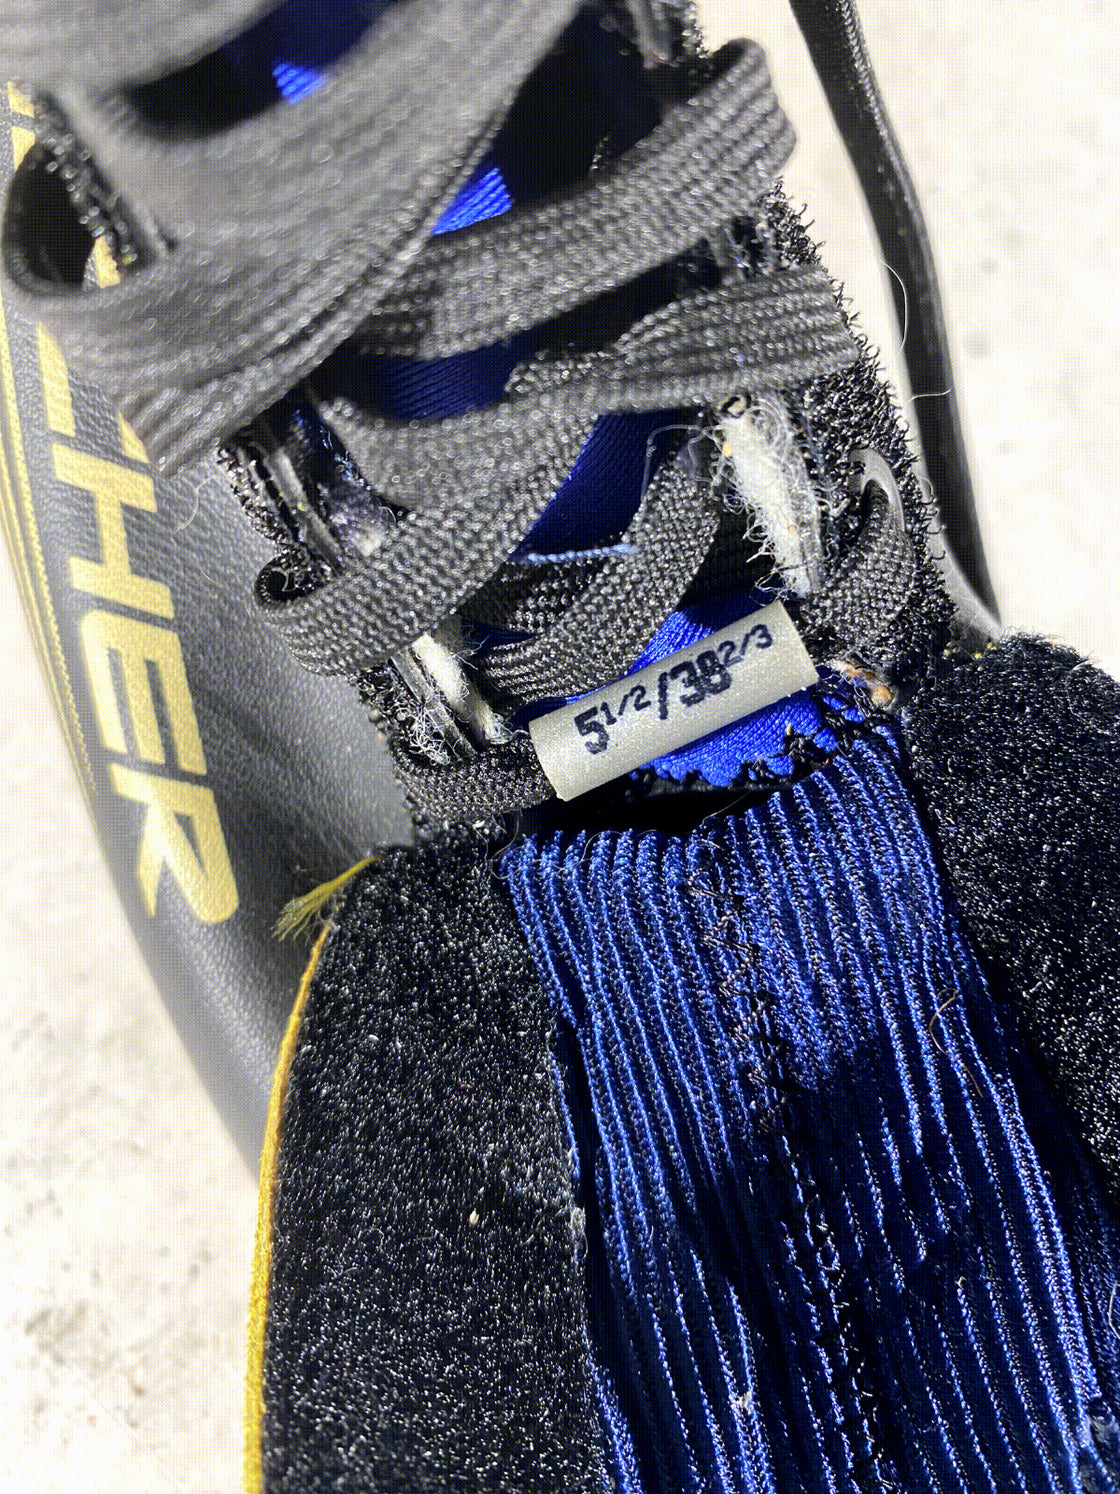 Fischer Classic Nordic Cross Country Ski Boots Size EU38 2/3 US6.5 SNS Profil